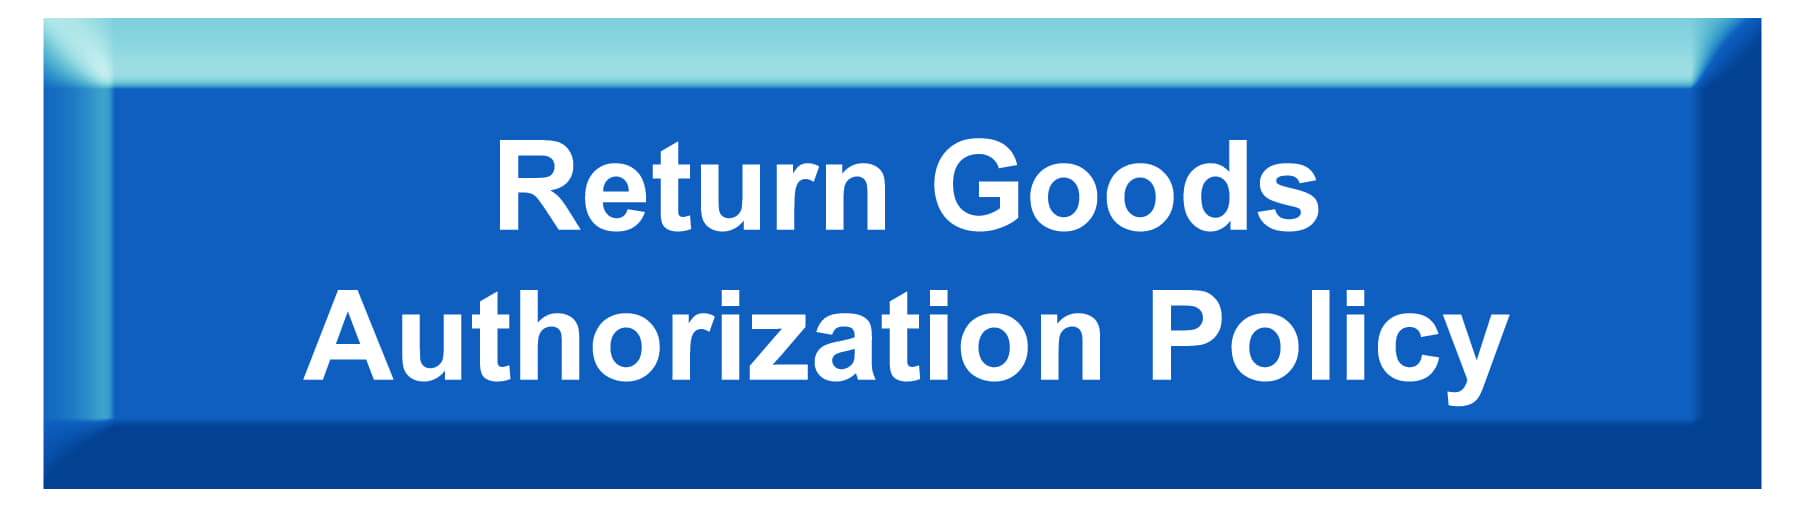 Return Goods Authorization Policy